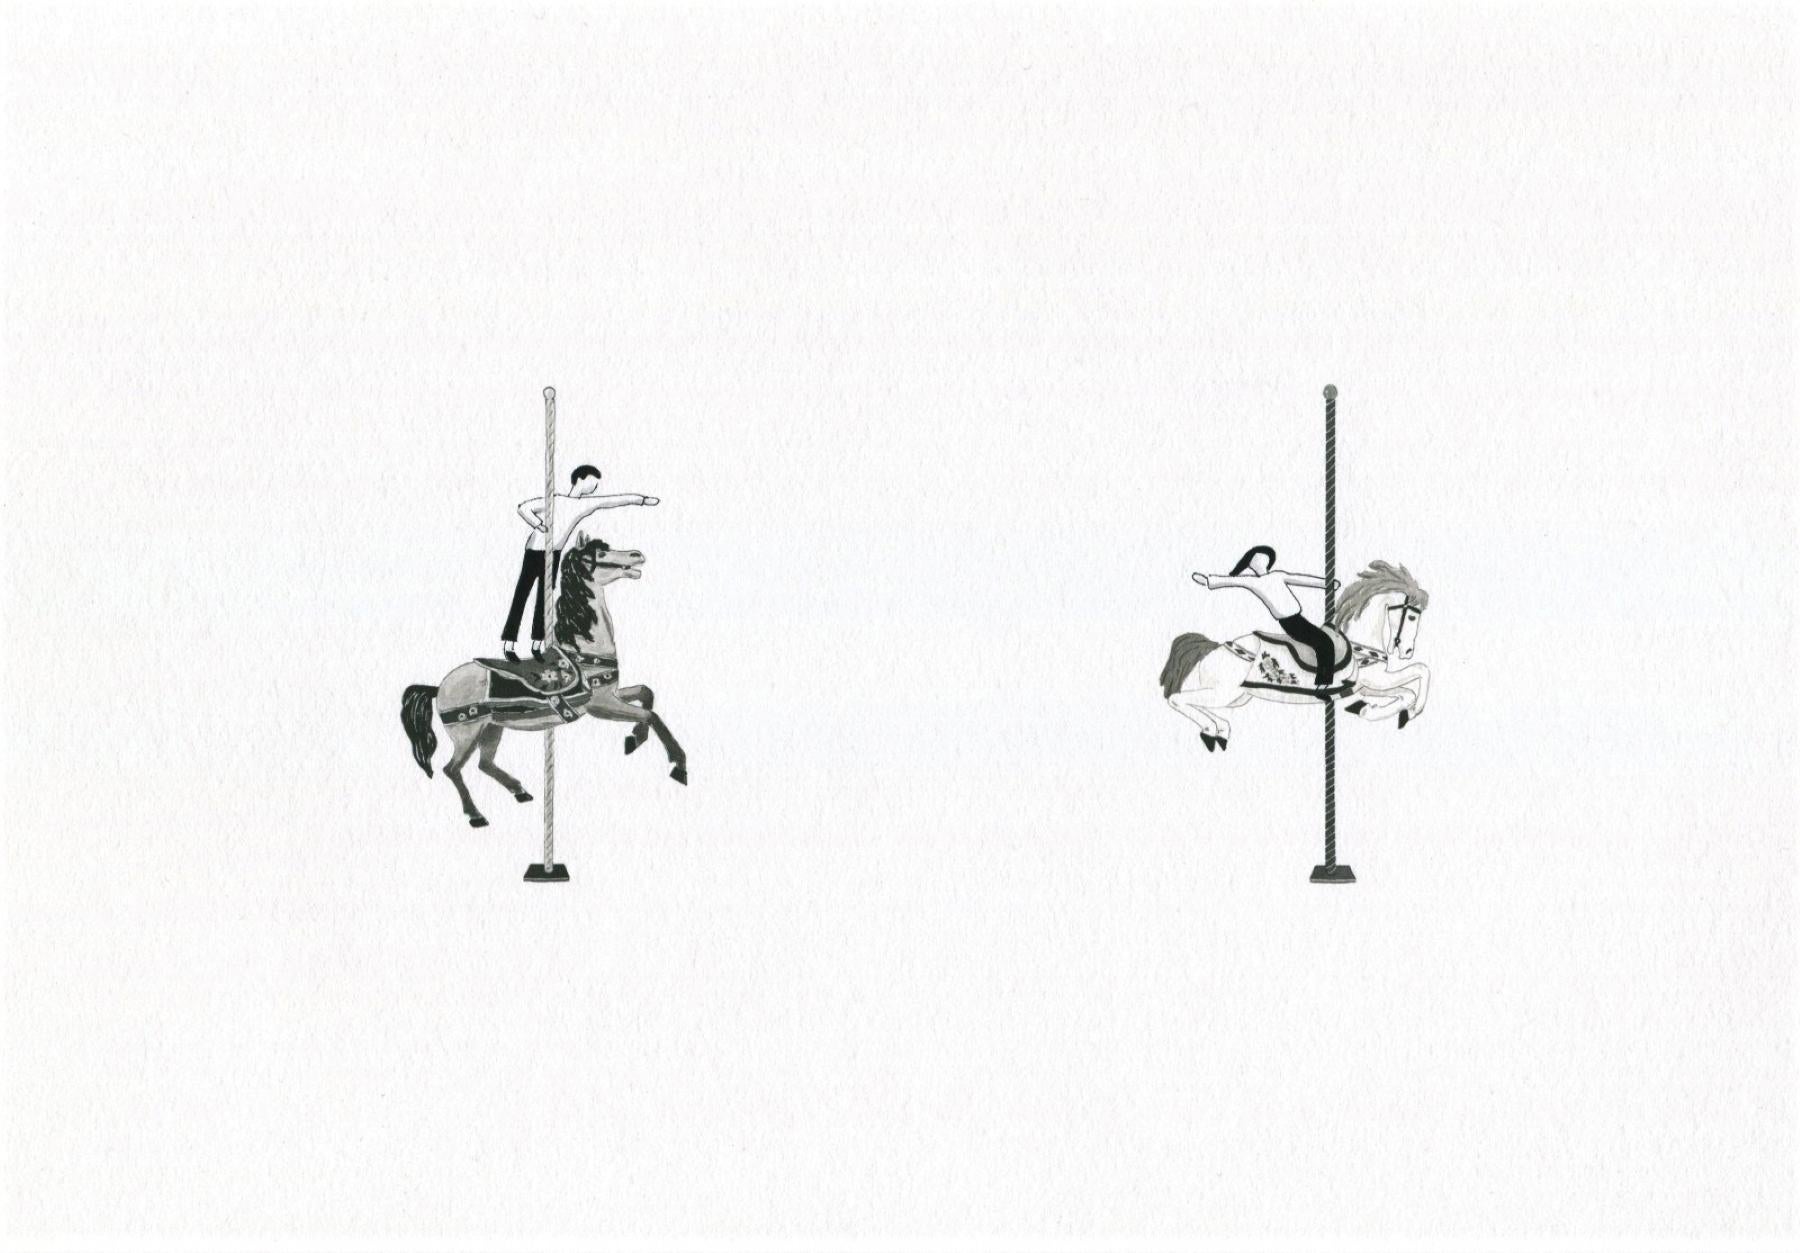 Kin Choi Lam Portrait Print - "Merry-go-round" archival print on paper couple relationship love minimalism